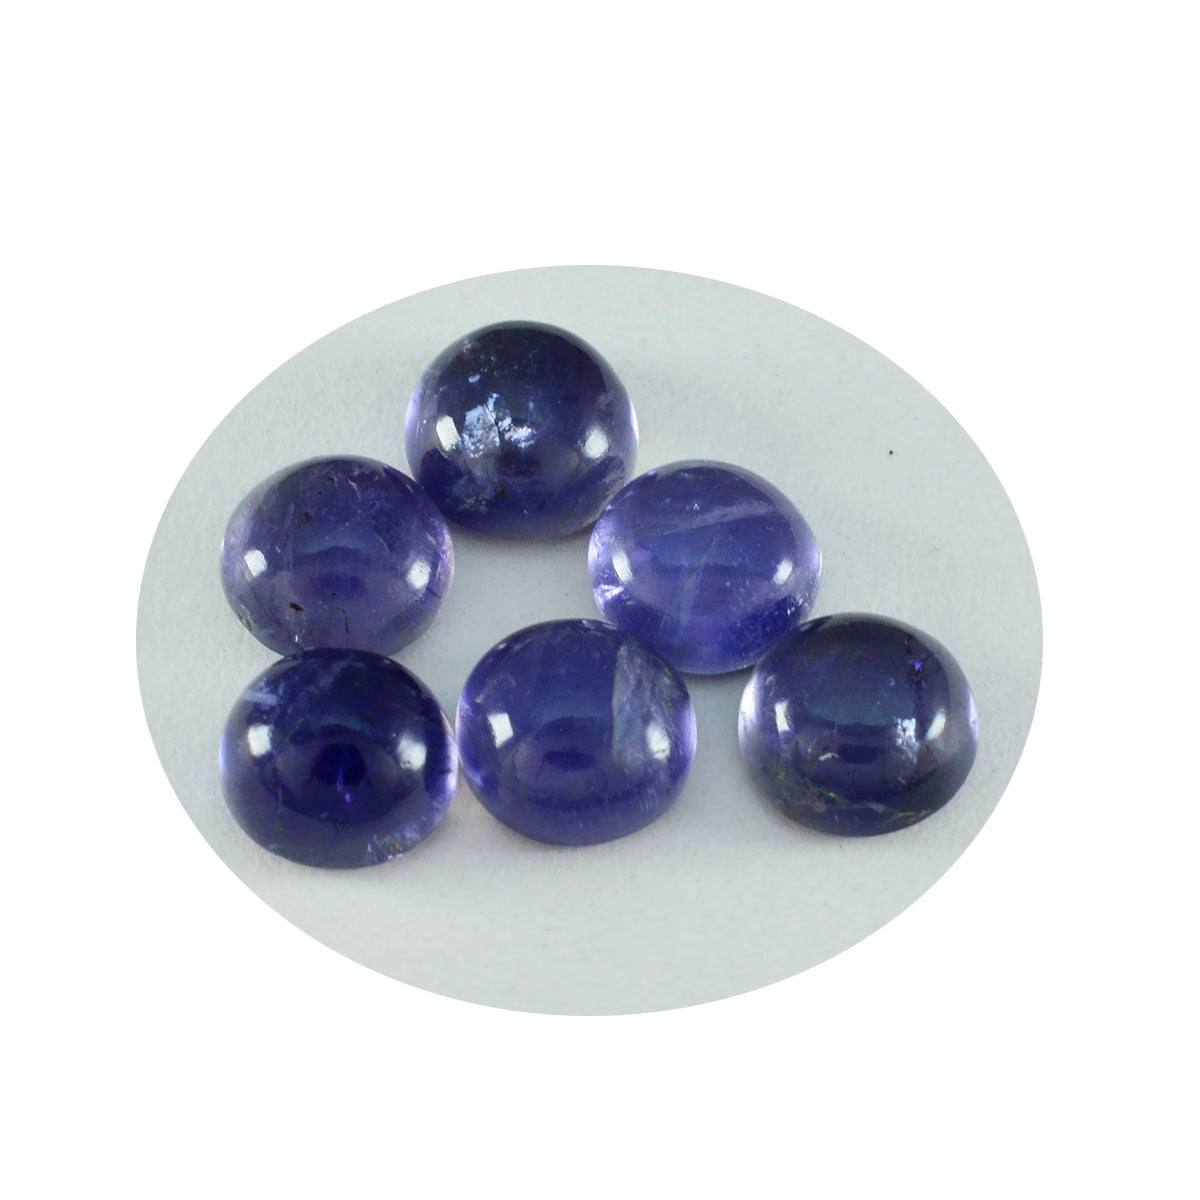 Riyogems 1PC Blue Iolite Cabochon 14x14 mm Round Shape pretty Quality Gemstone